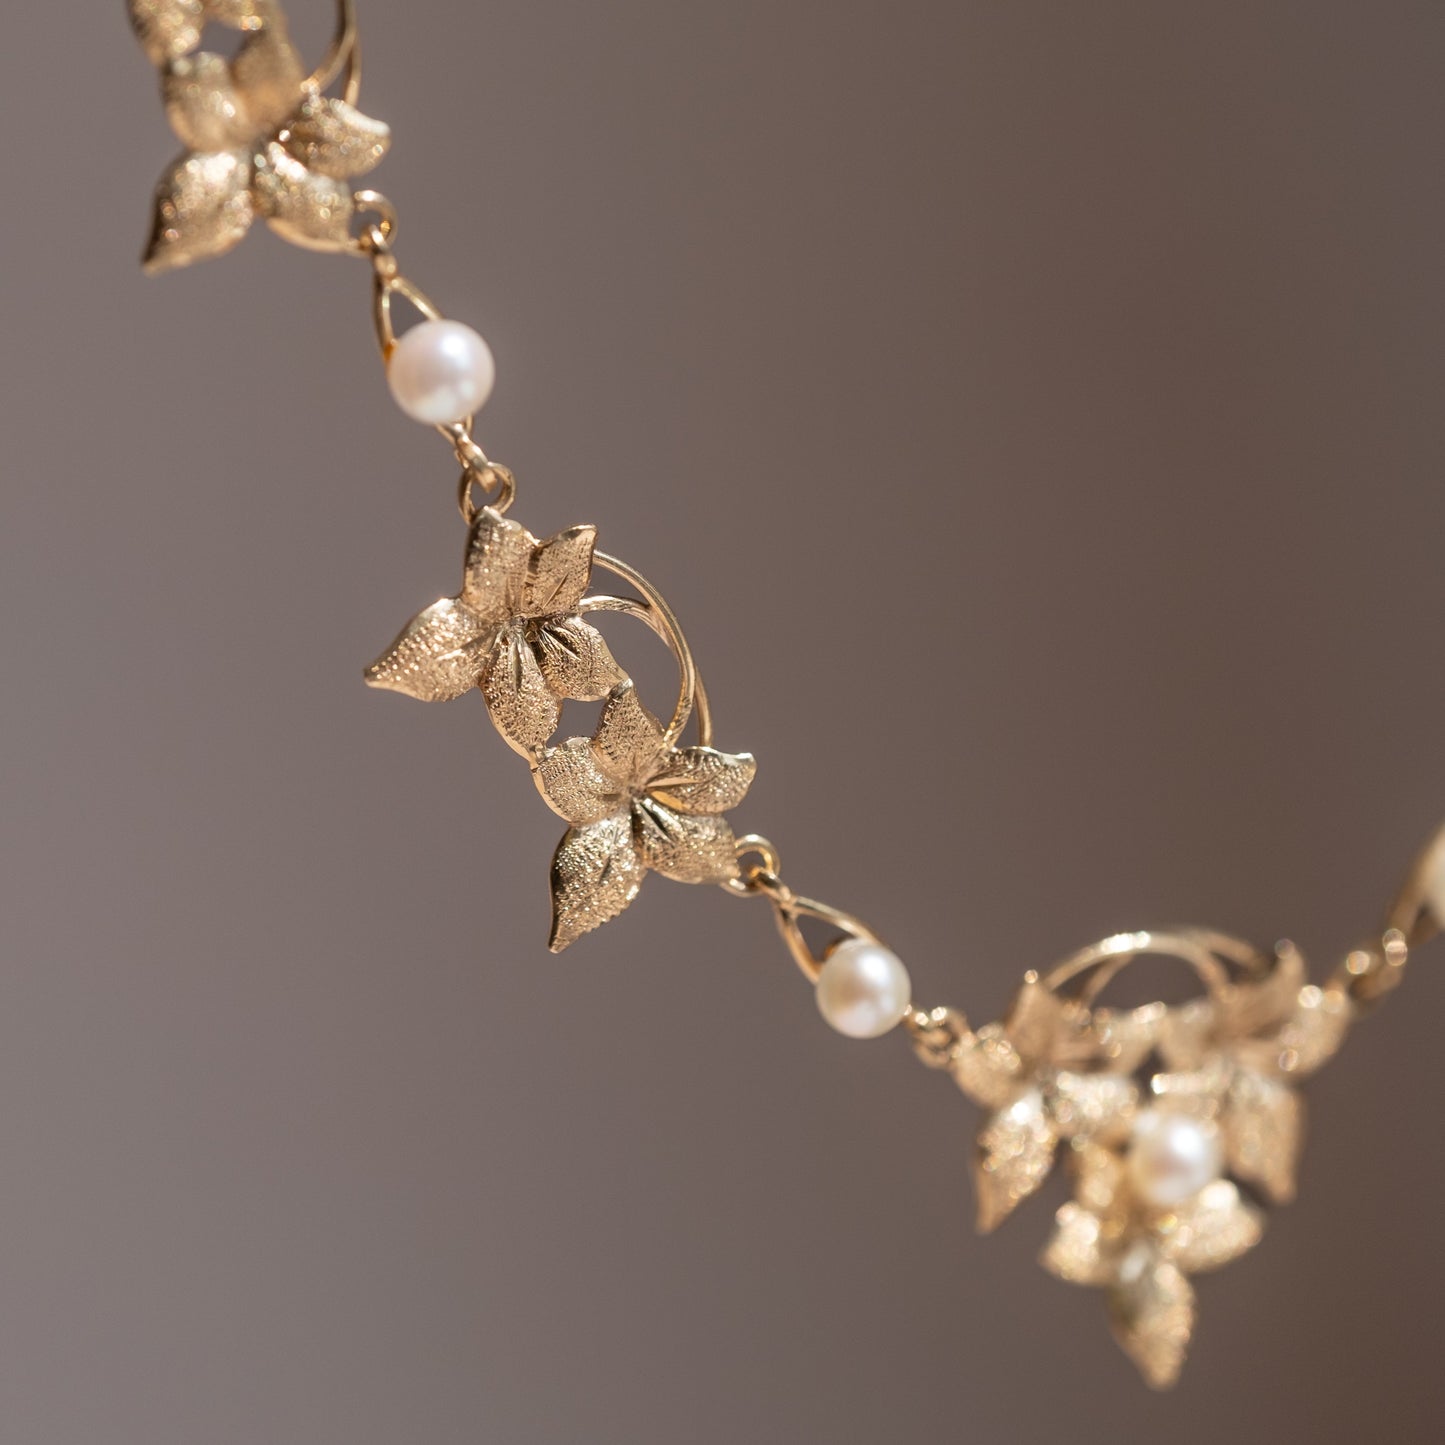 The Golden Eden Necklace